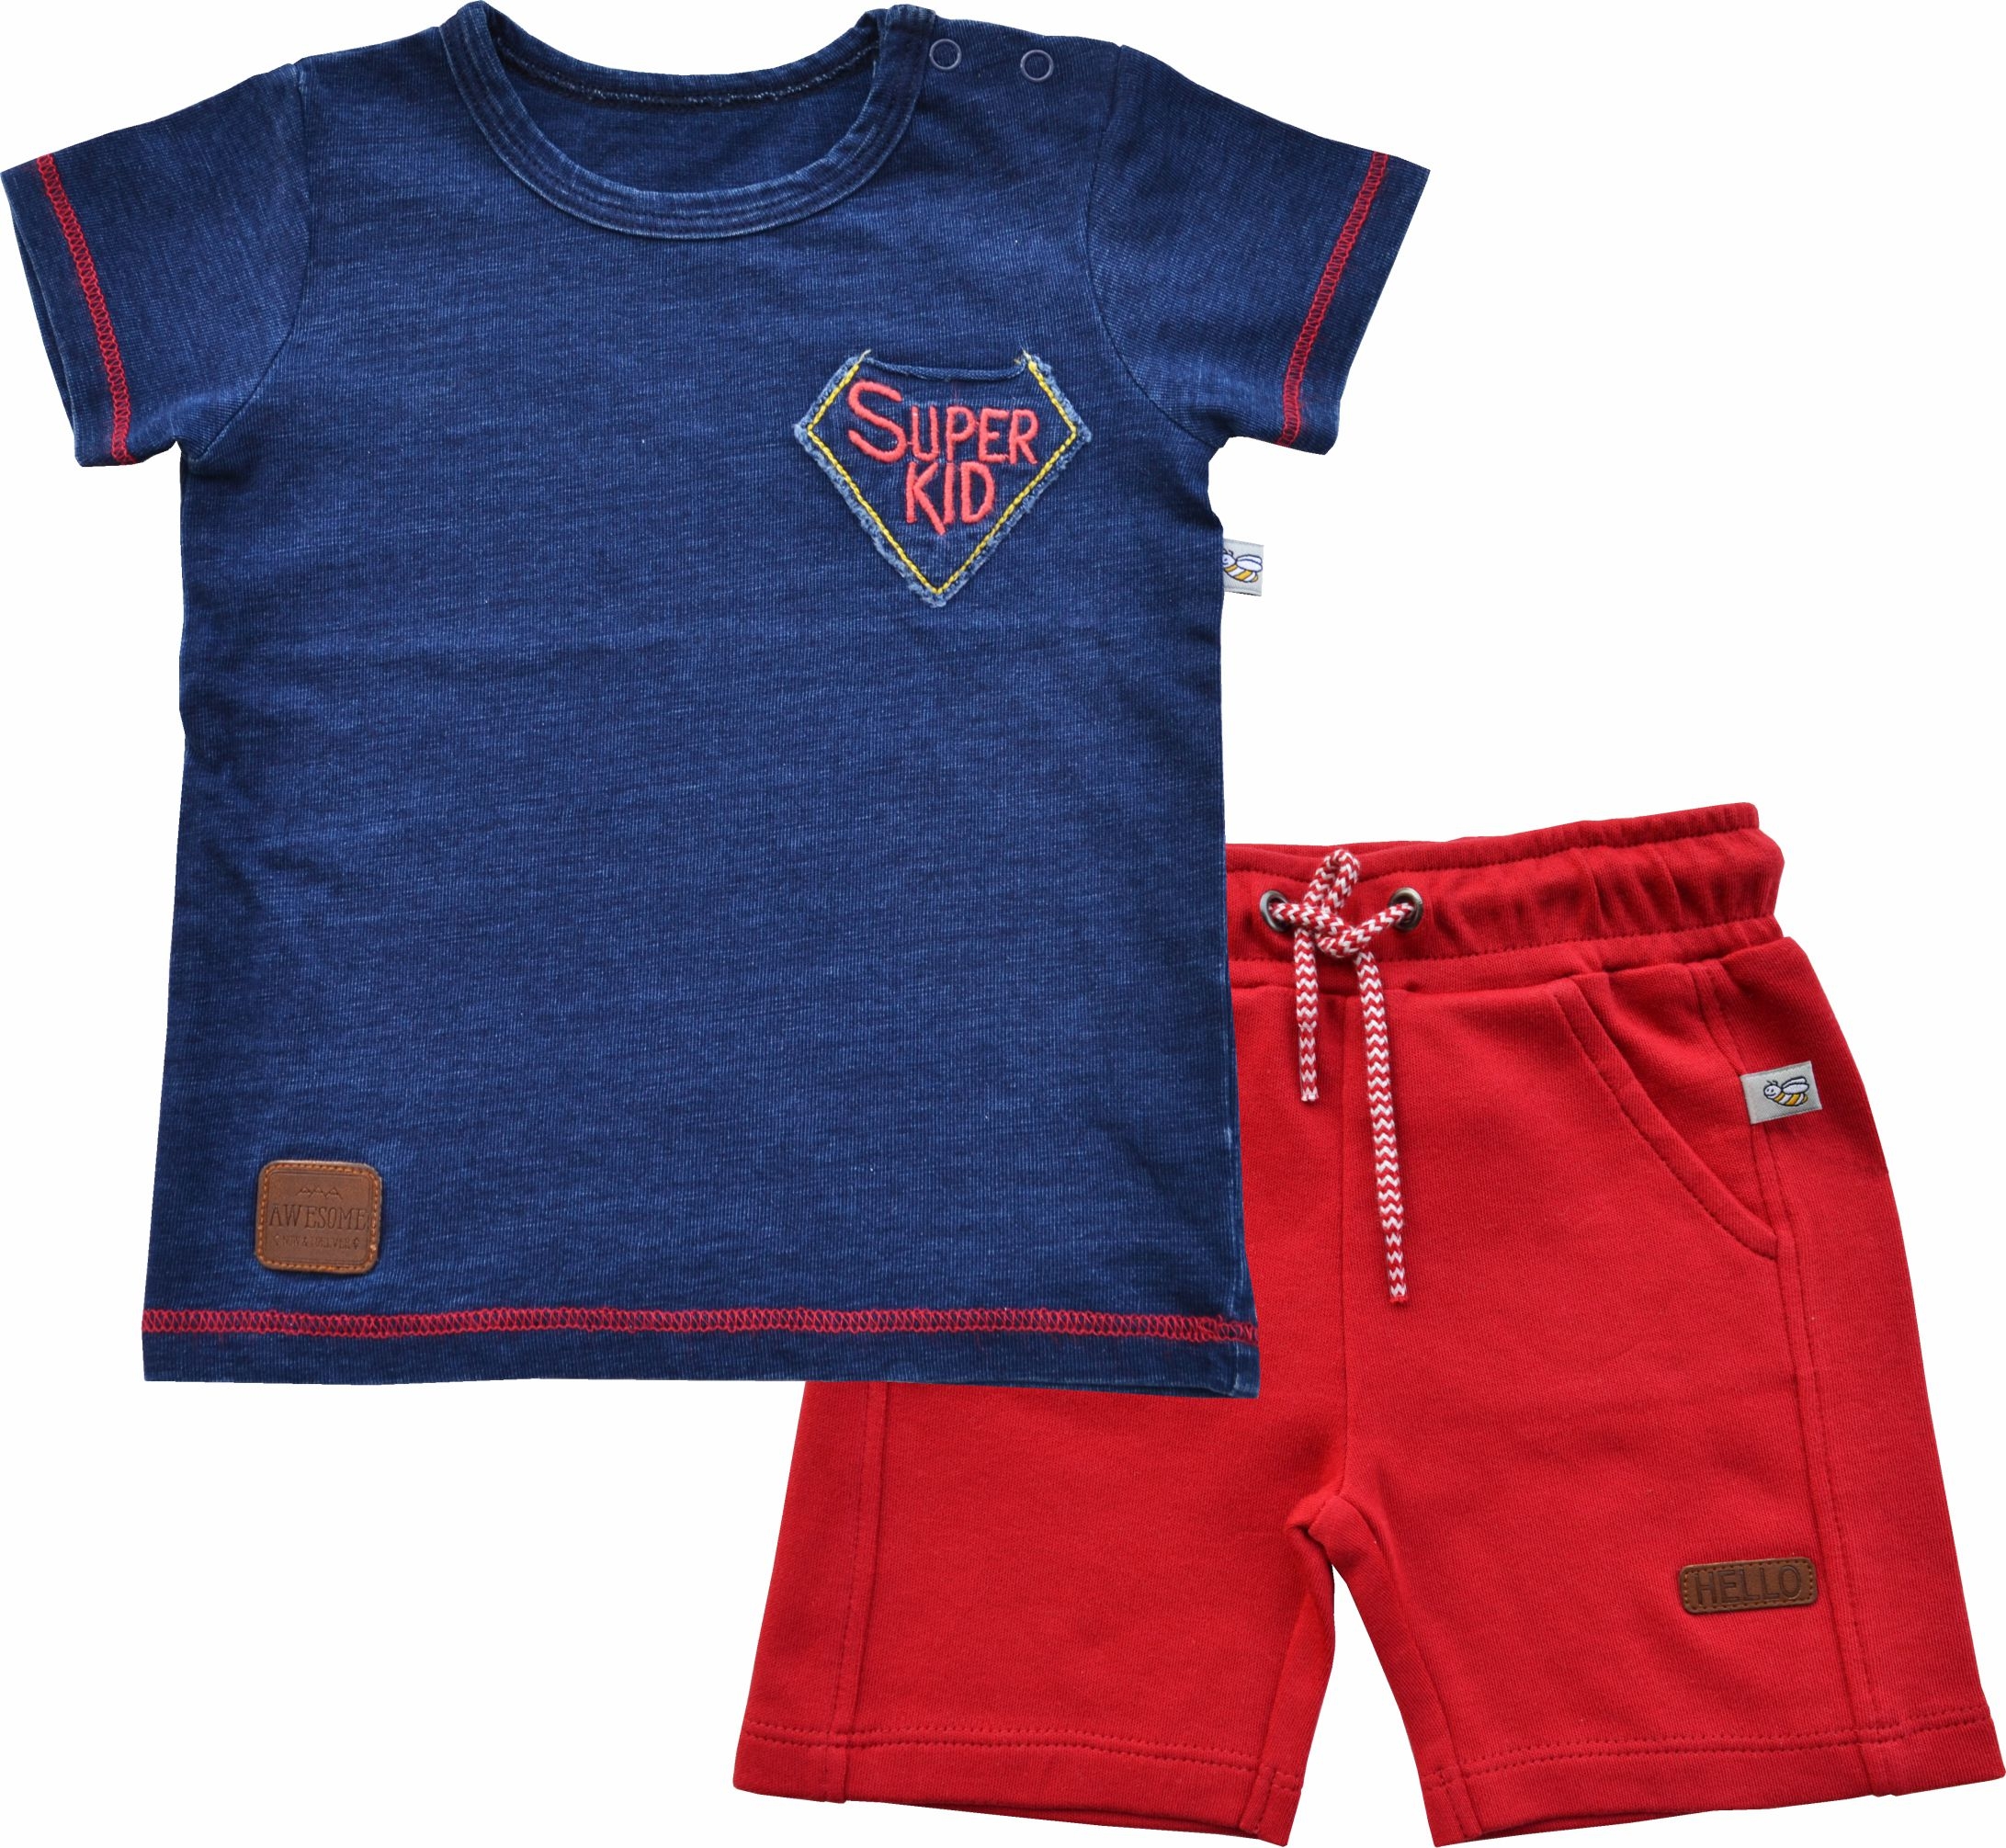 Super Kid Emb on Denim Look T-Shirt+Red Shorts Set (100% Cotton Single Jersey)